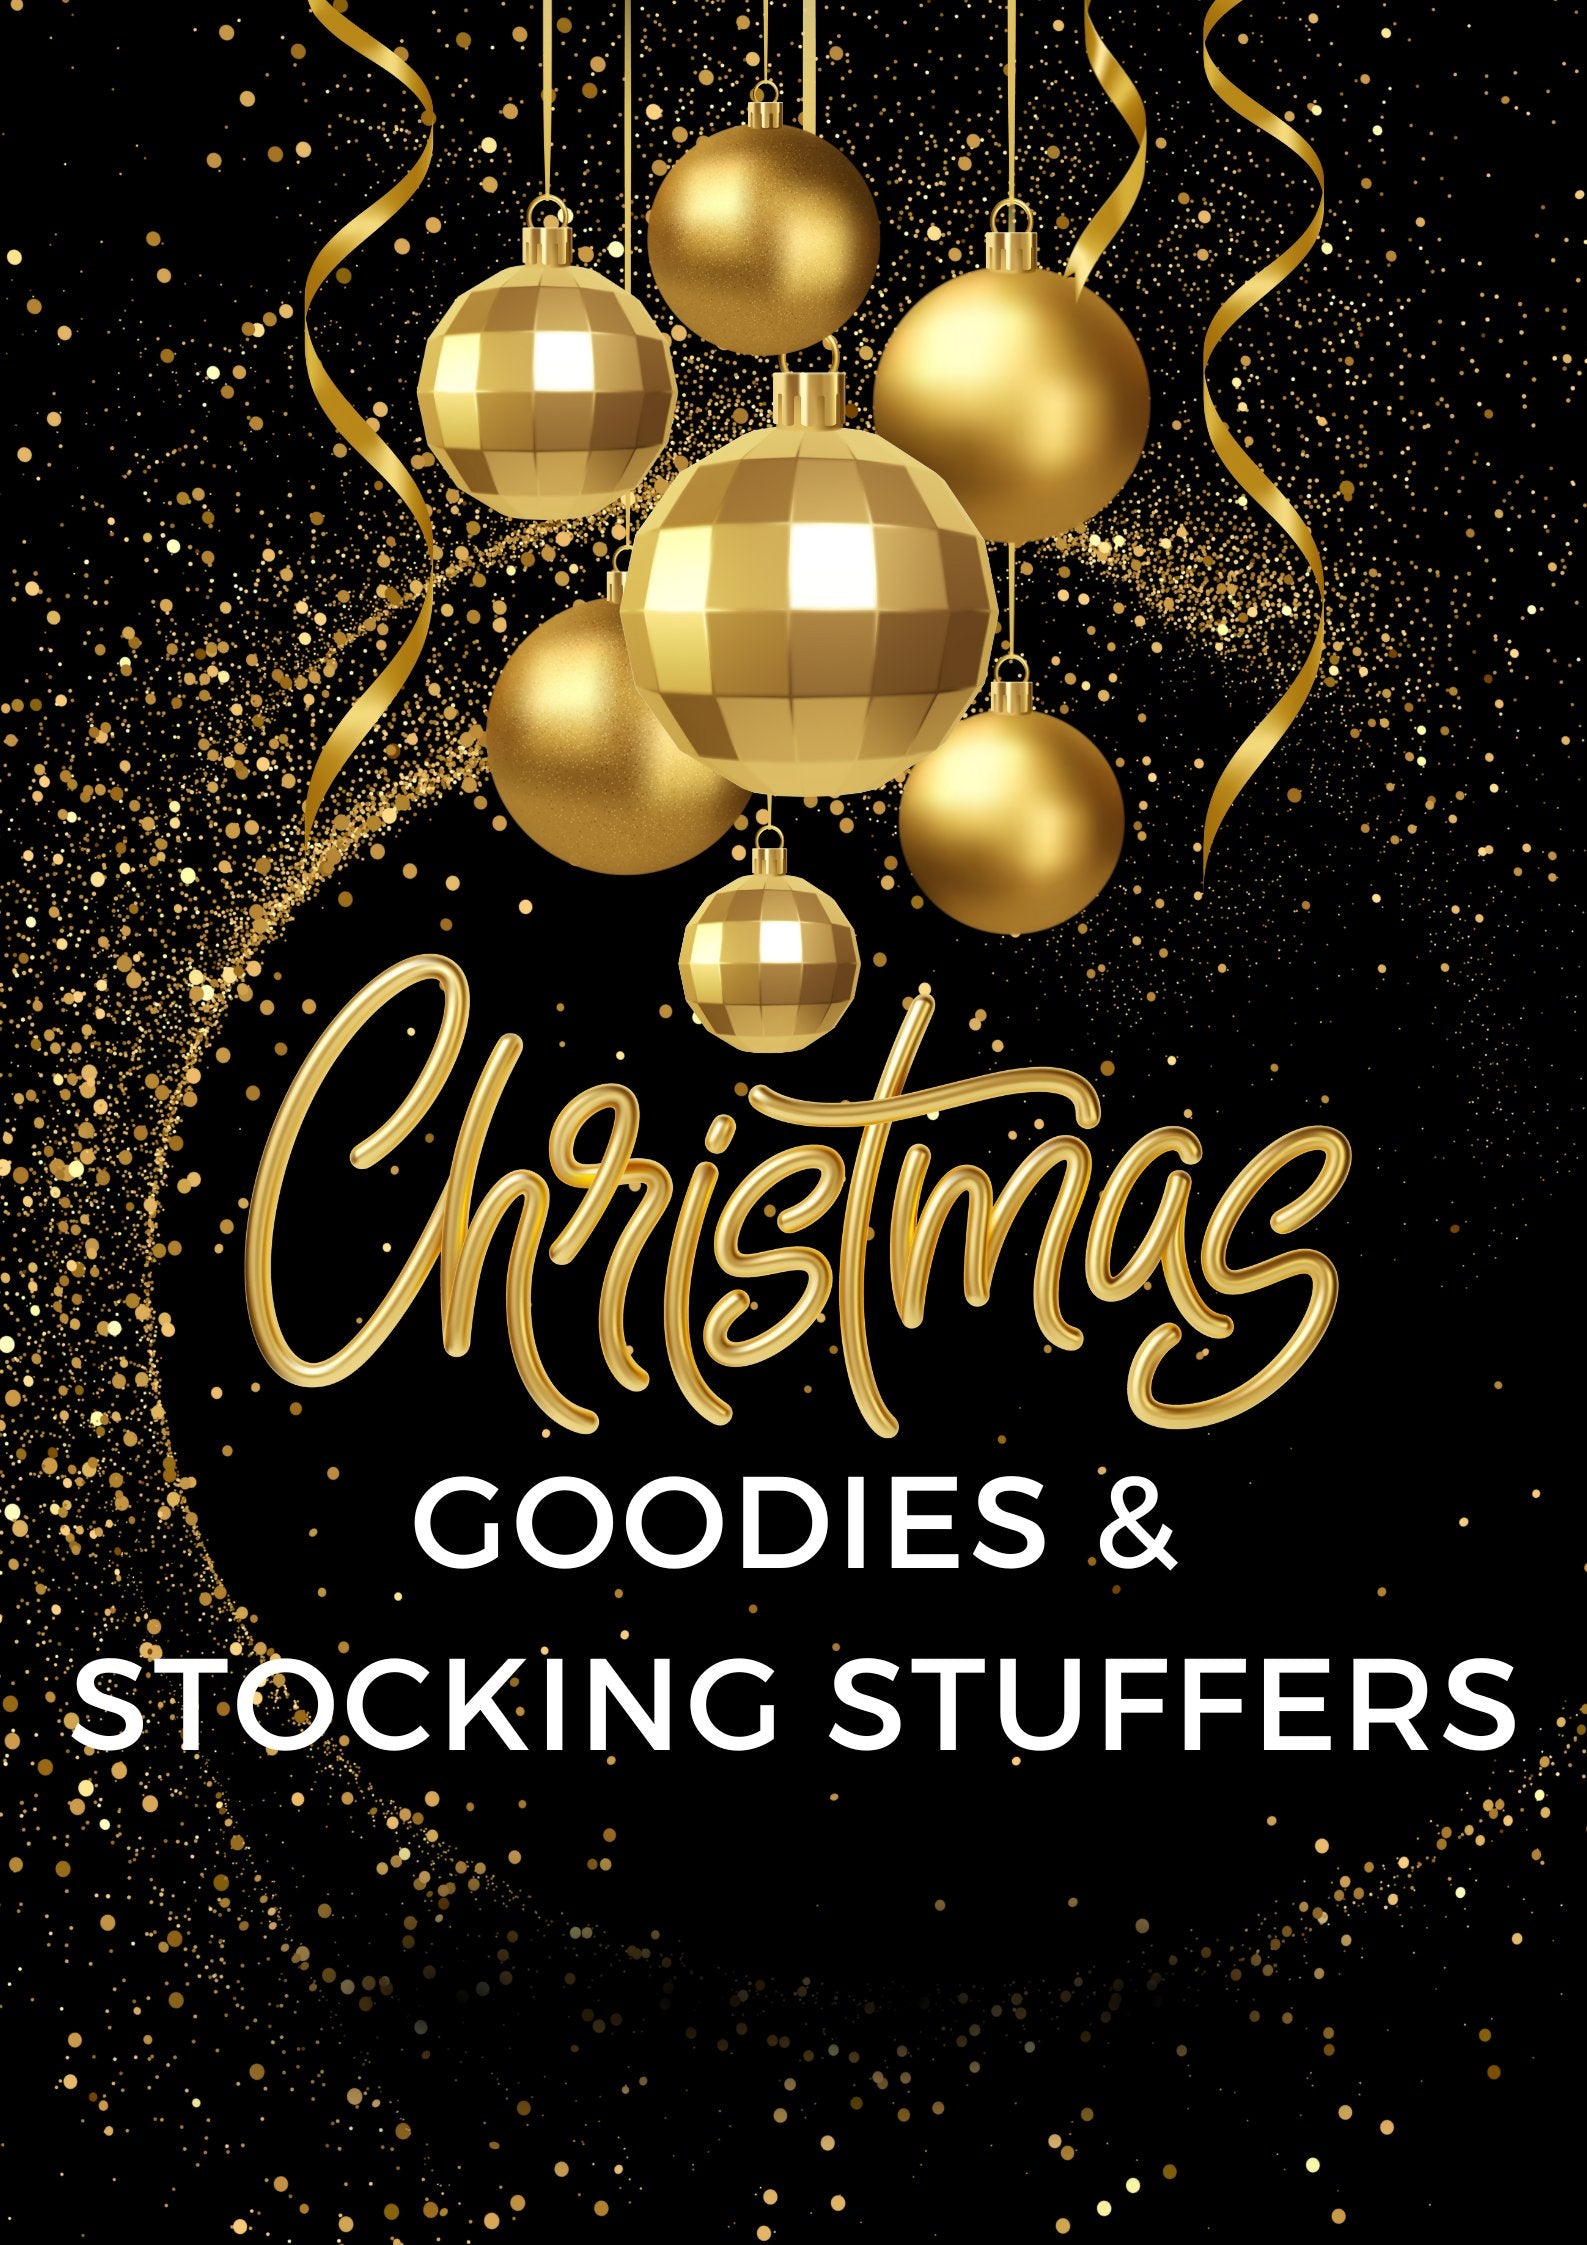 Christmas Goodies and stocking stuffers